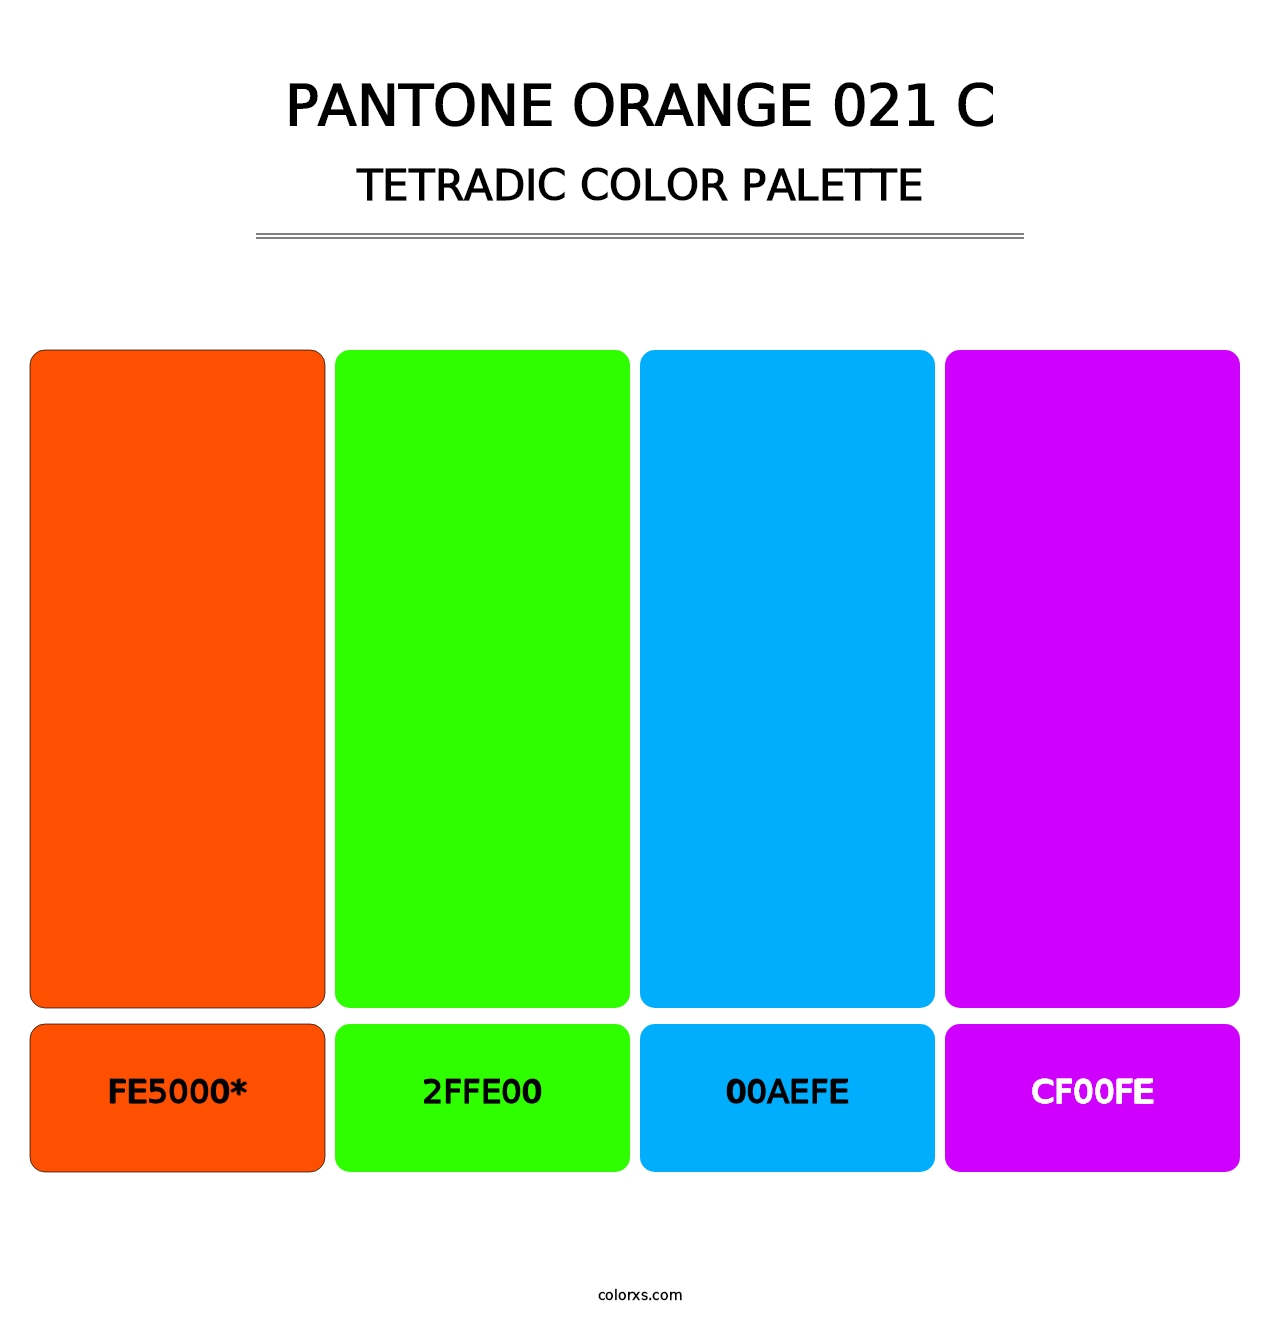 PANTONE Orange 021 C - Tetradic Color Palette